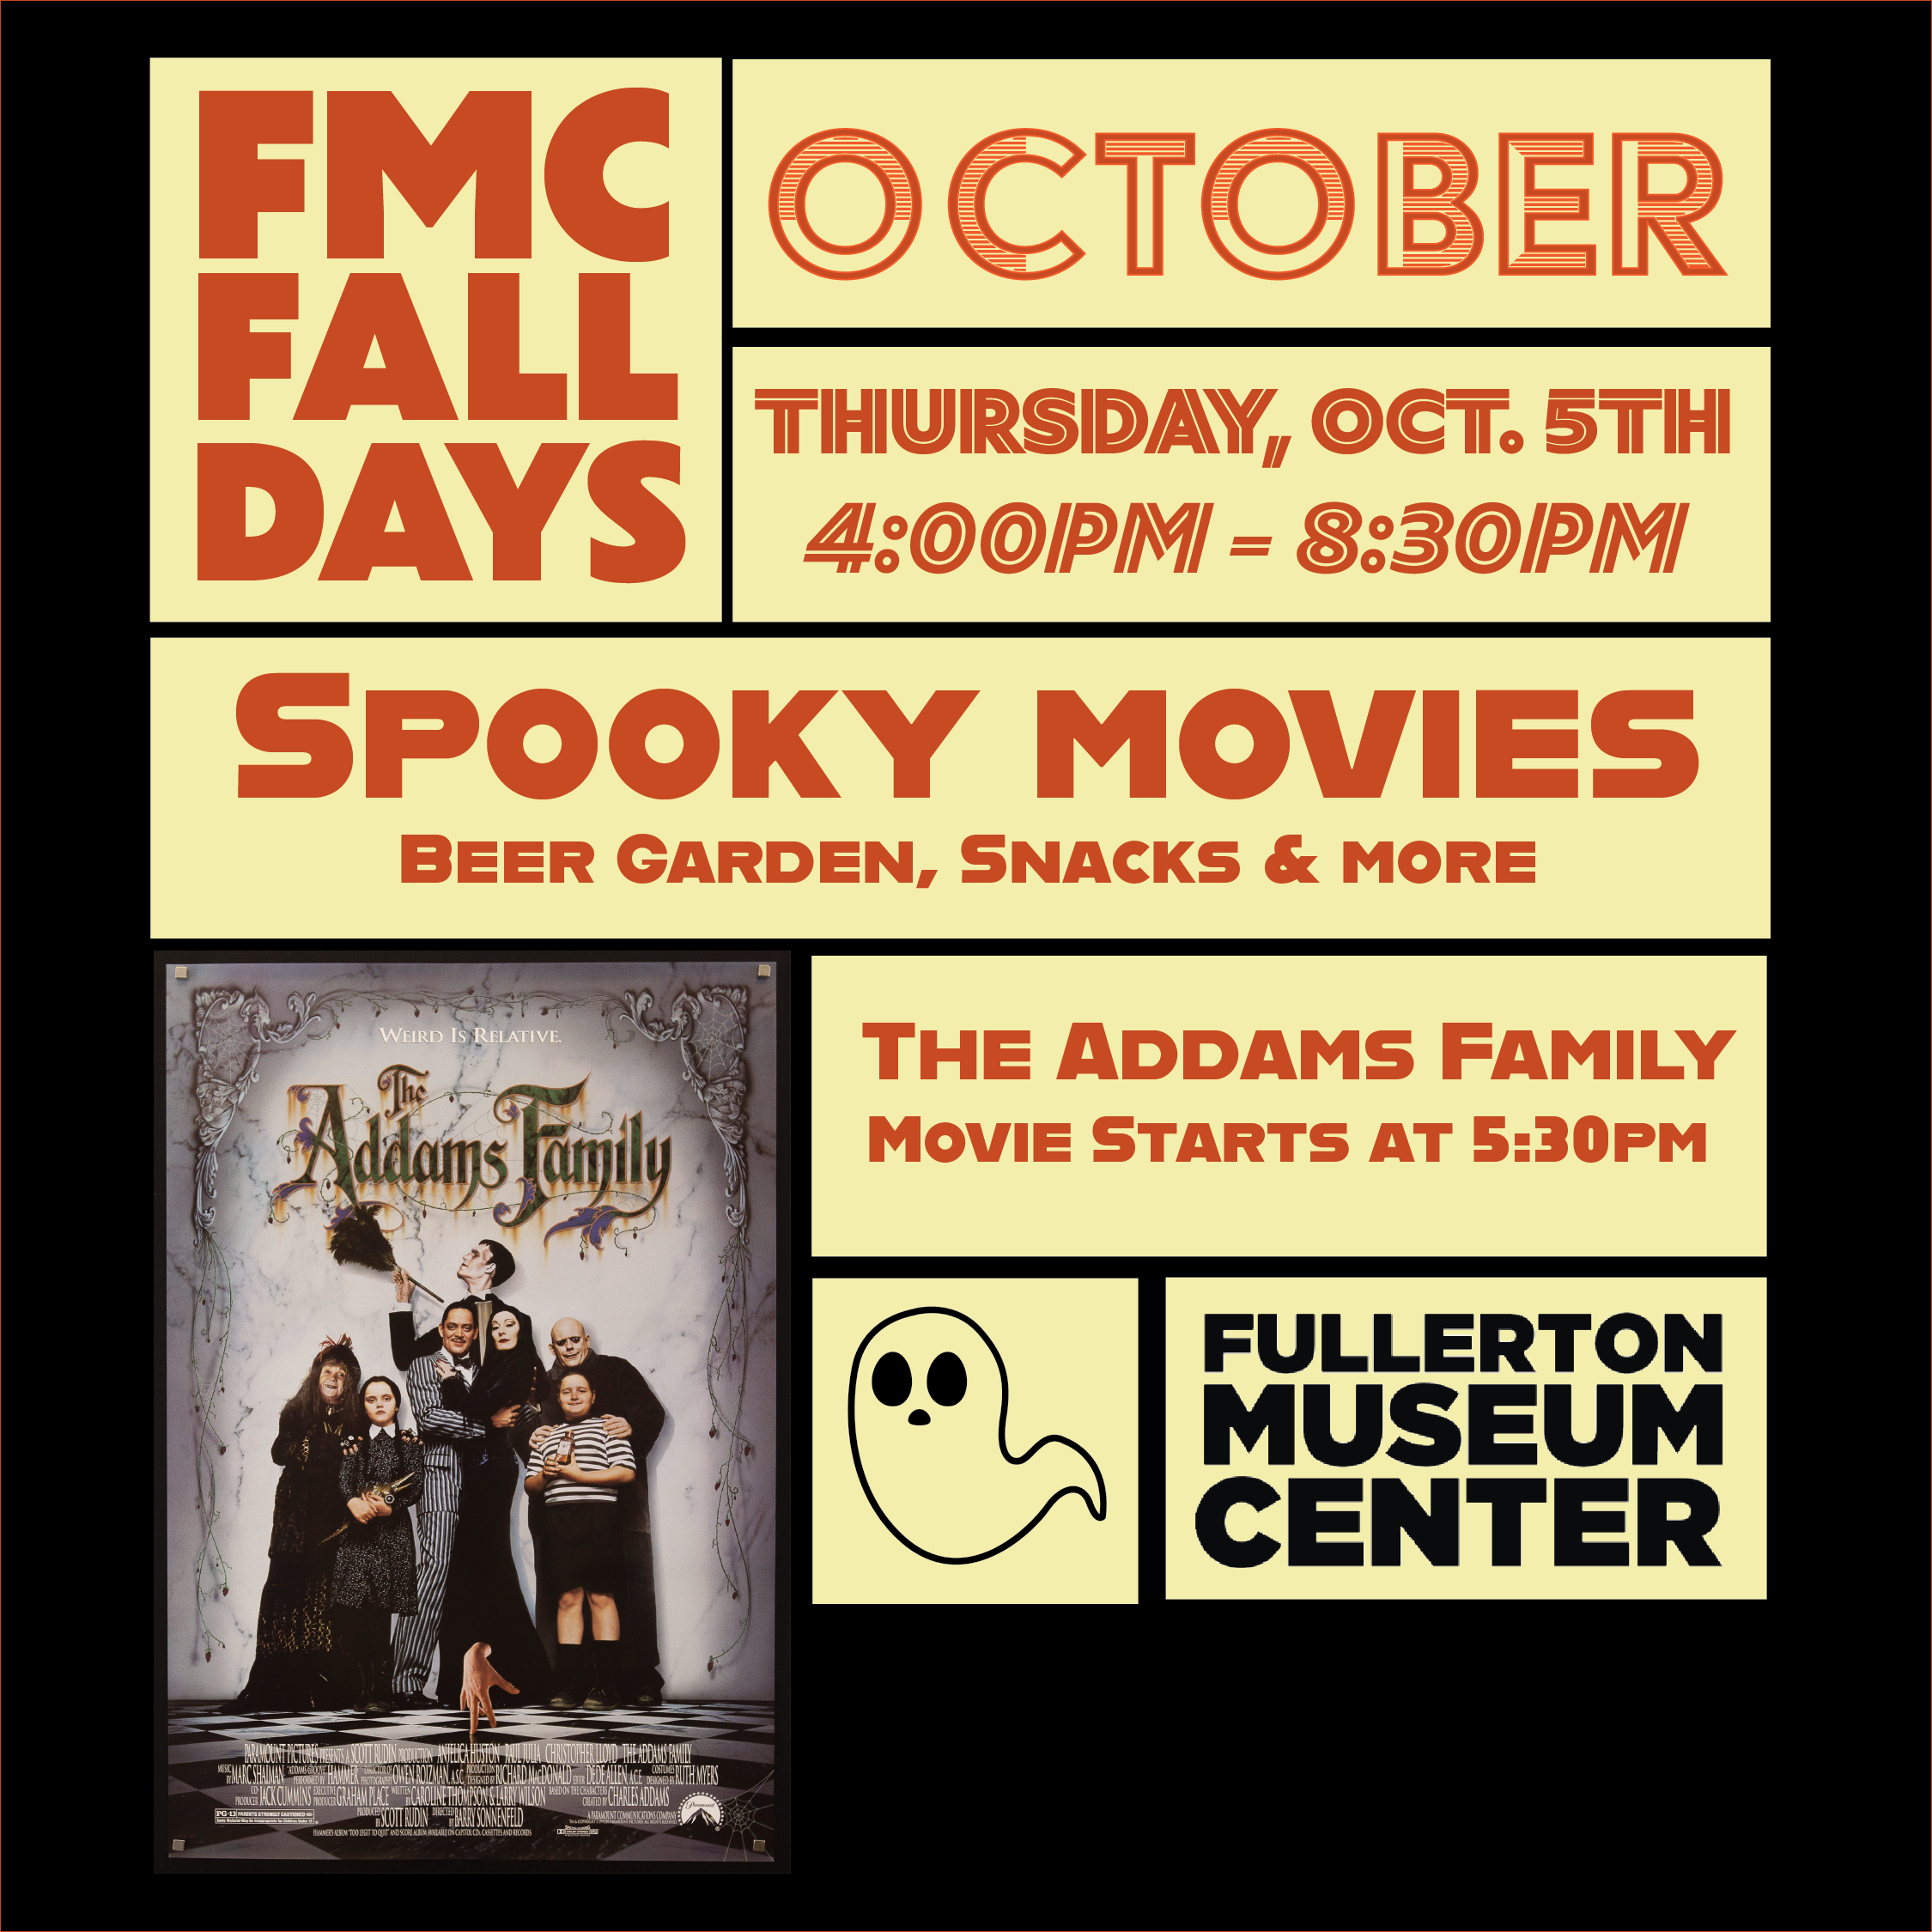 FMC's Fall Days